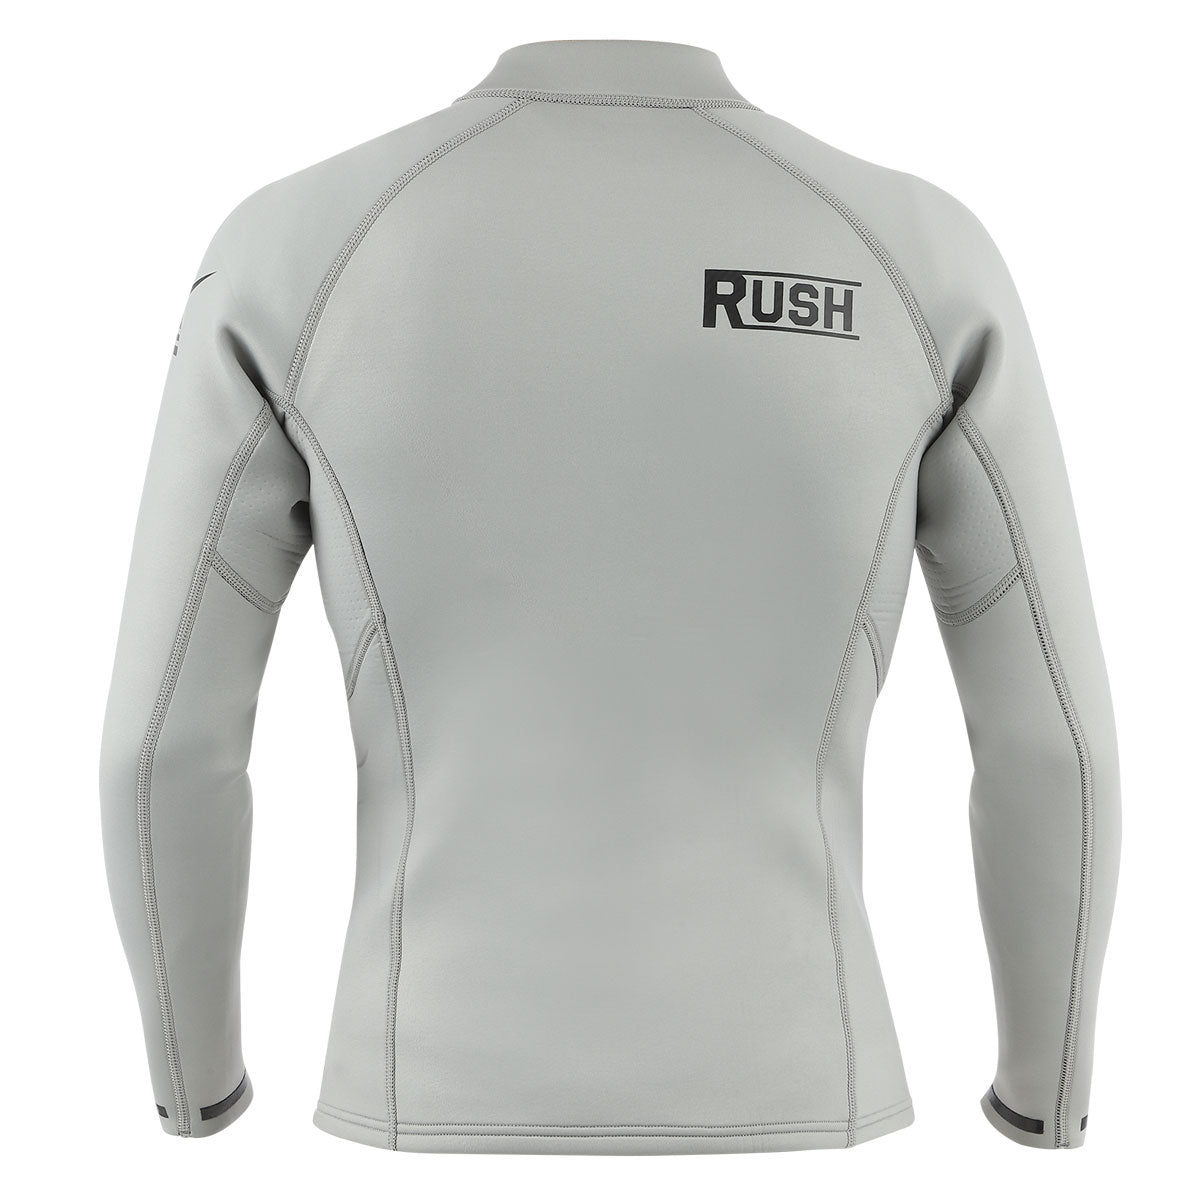 [2024 New Item] UNLIMITED RUSH Jacket Wetsuit Jet Ski Marine Sports UWA2240